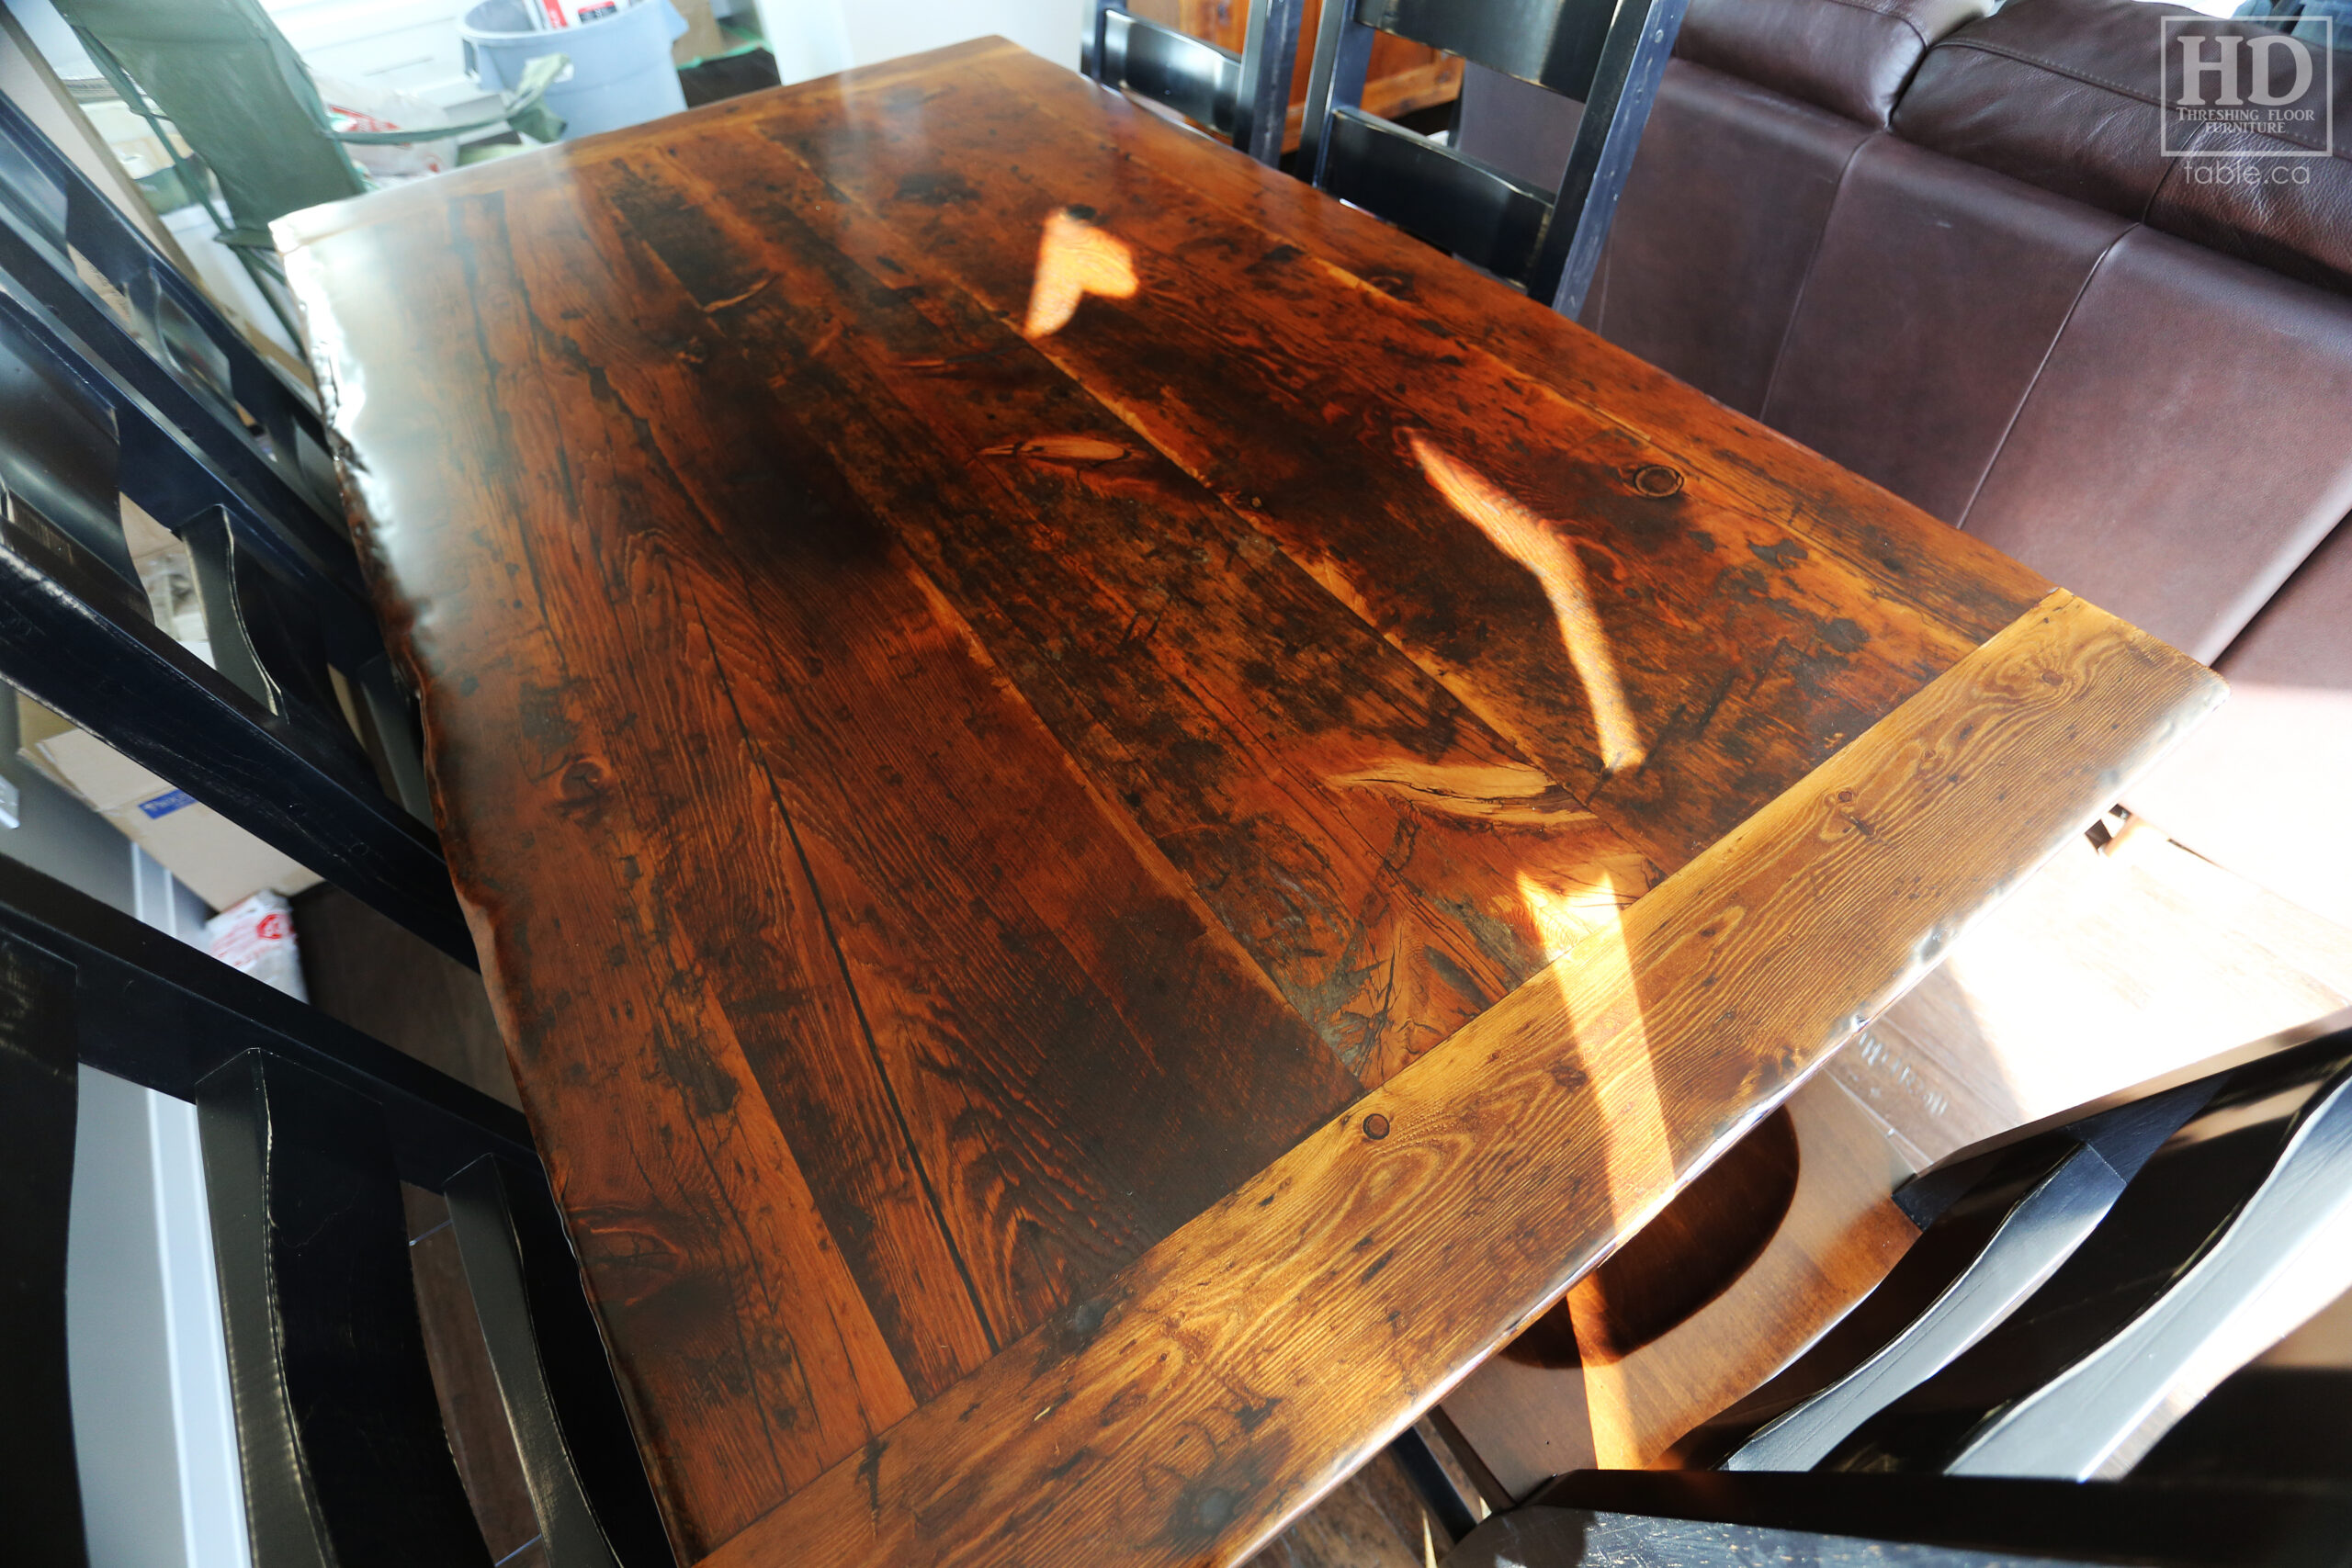 Barnboard Table made from Ontario Barnwood by HD Threshing Floor Furniture / www.table.ca